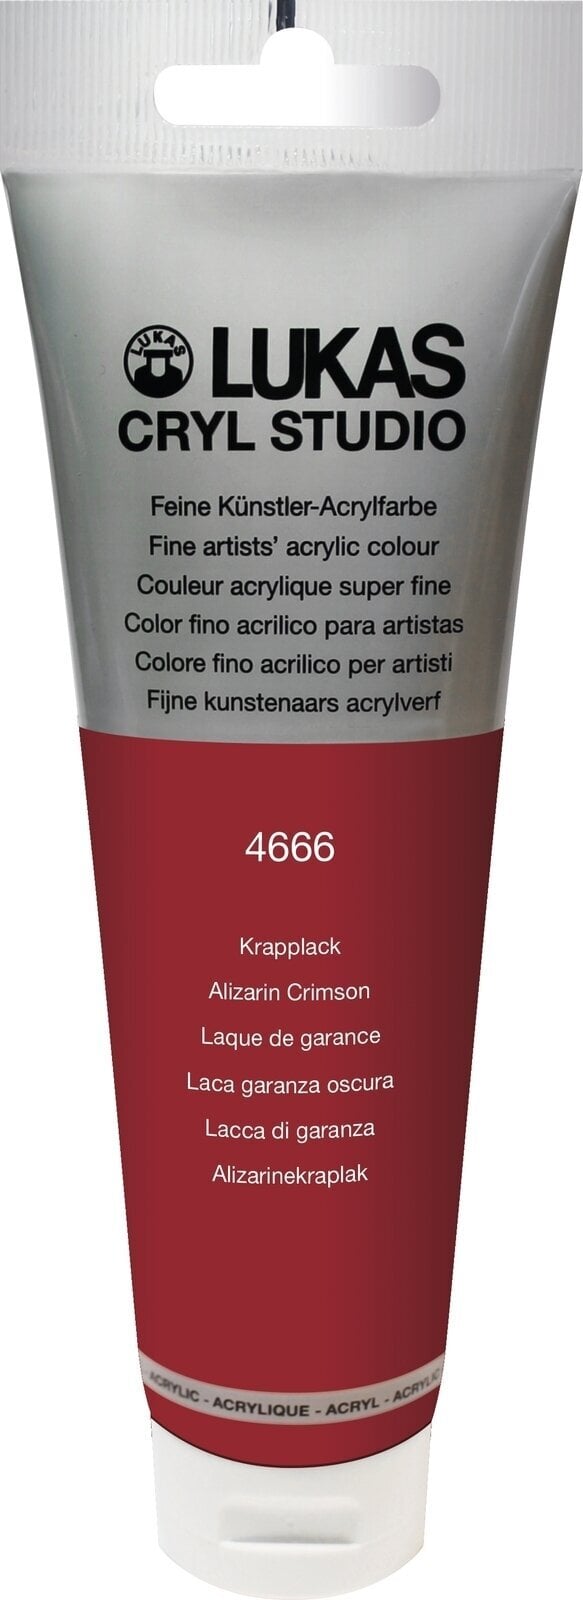 Akrylová farba Lukas Cryl Studio Acrylic Paint Plastic Tube Akrylová farba Alizarin Crimson 125 ml 1 ks